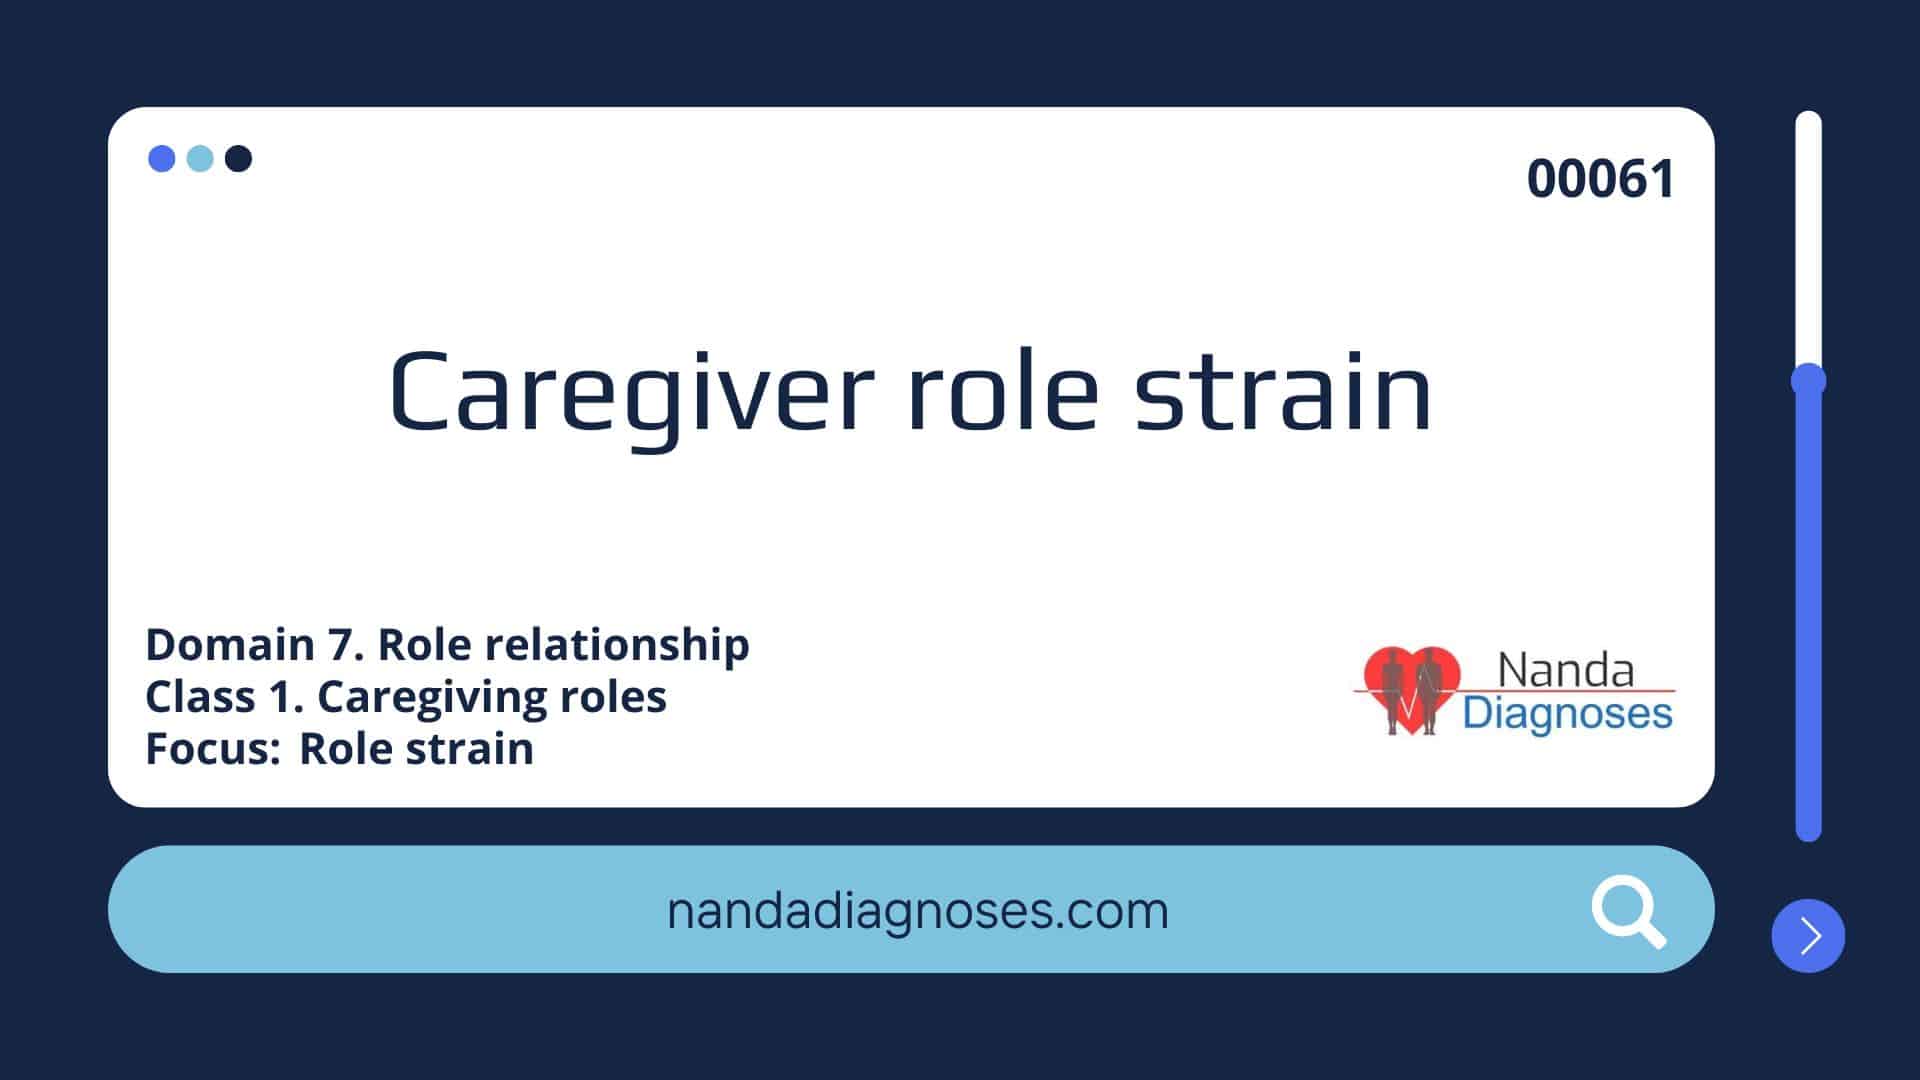 Nursing diagnosis Caregiver role strain